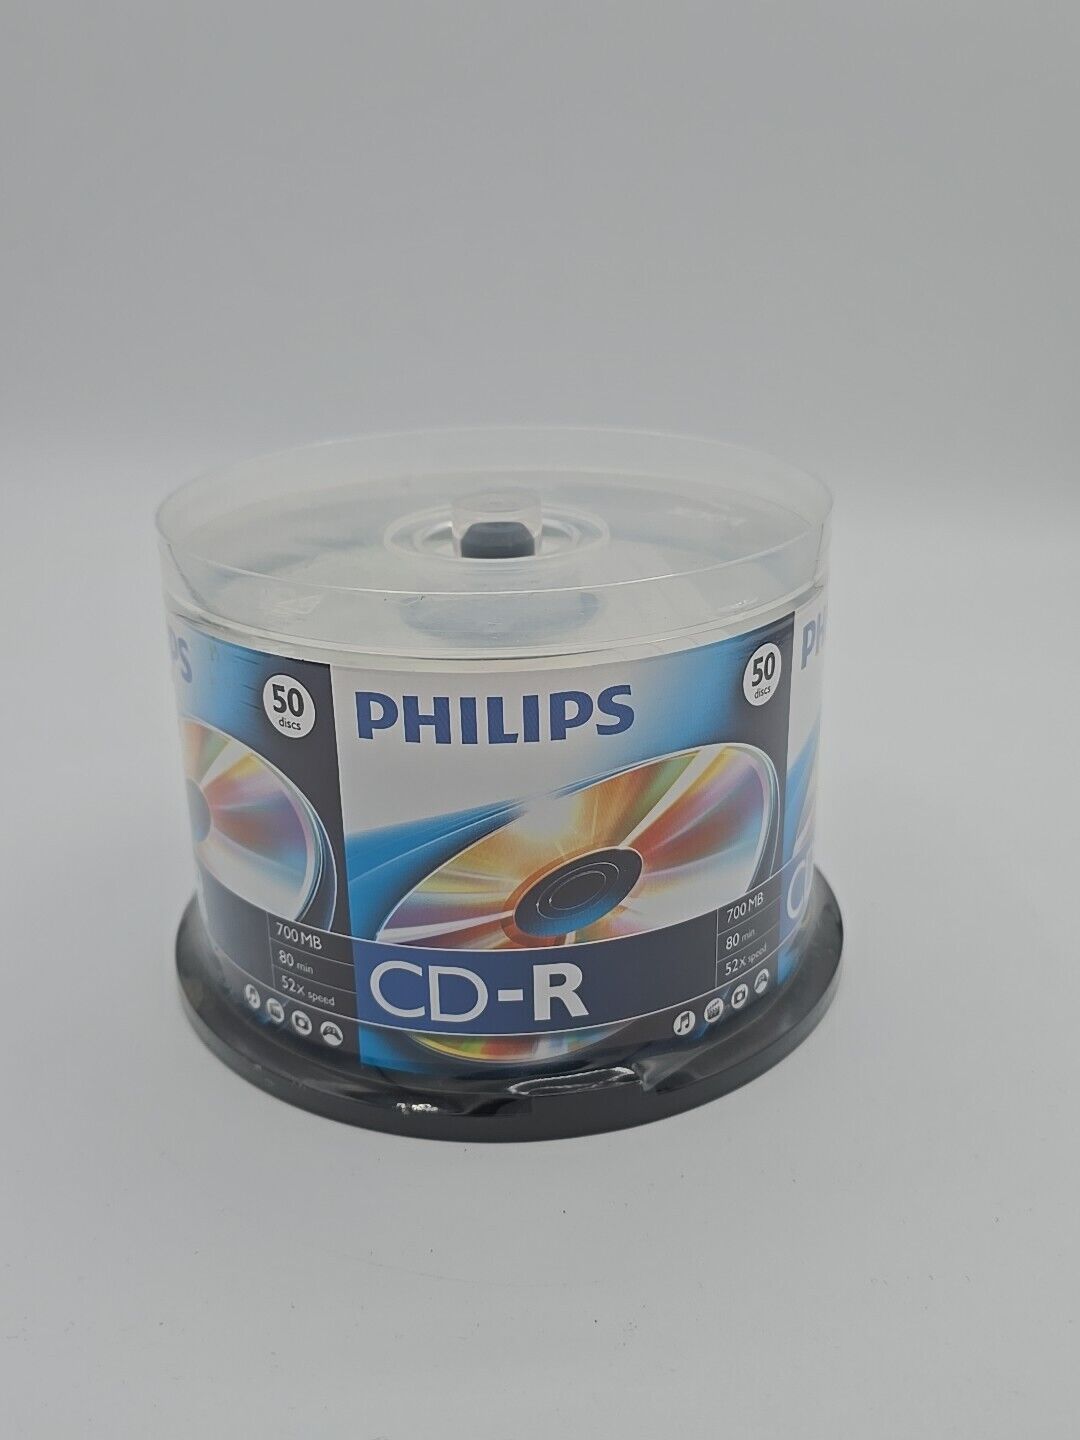 50 Pk Philips 52X Speed 700 MB 80 MIN Blank CD CD-R Discs for Digital Media NEW